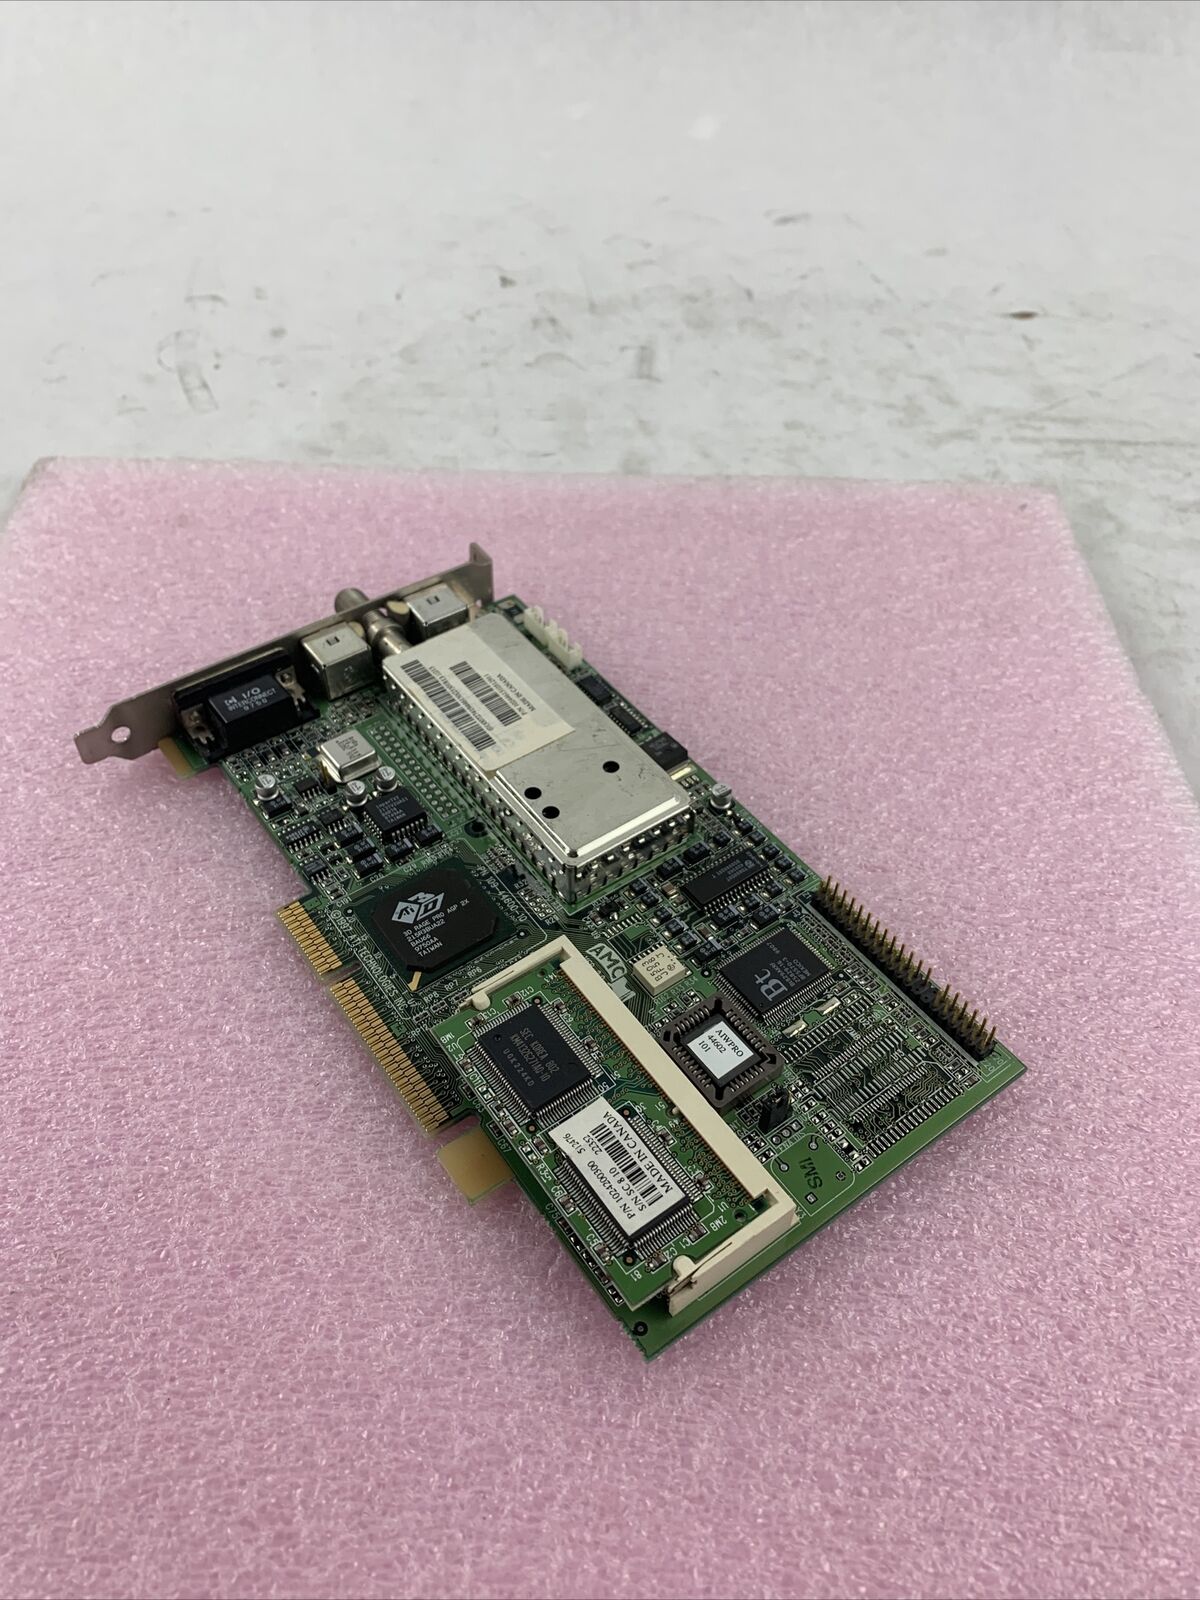 ATI 109-44600-10 3D Rage Pro AGP 2X VGA Graphics Card w/ Video Memory Board